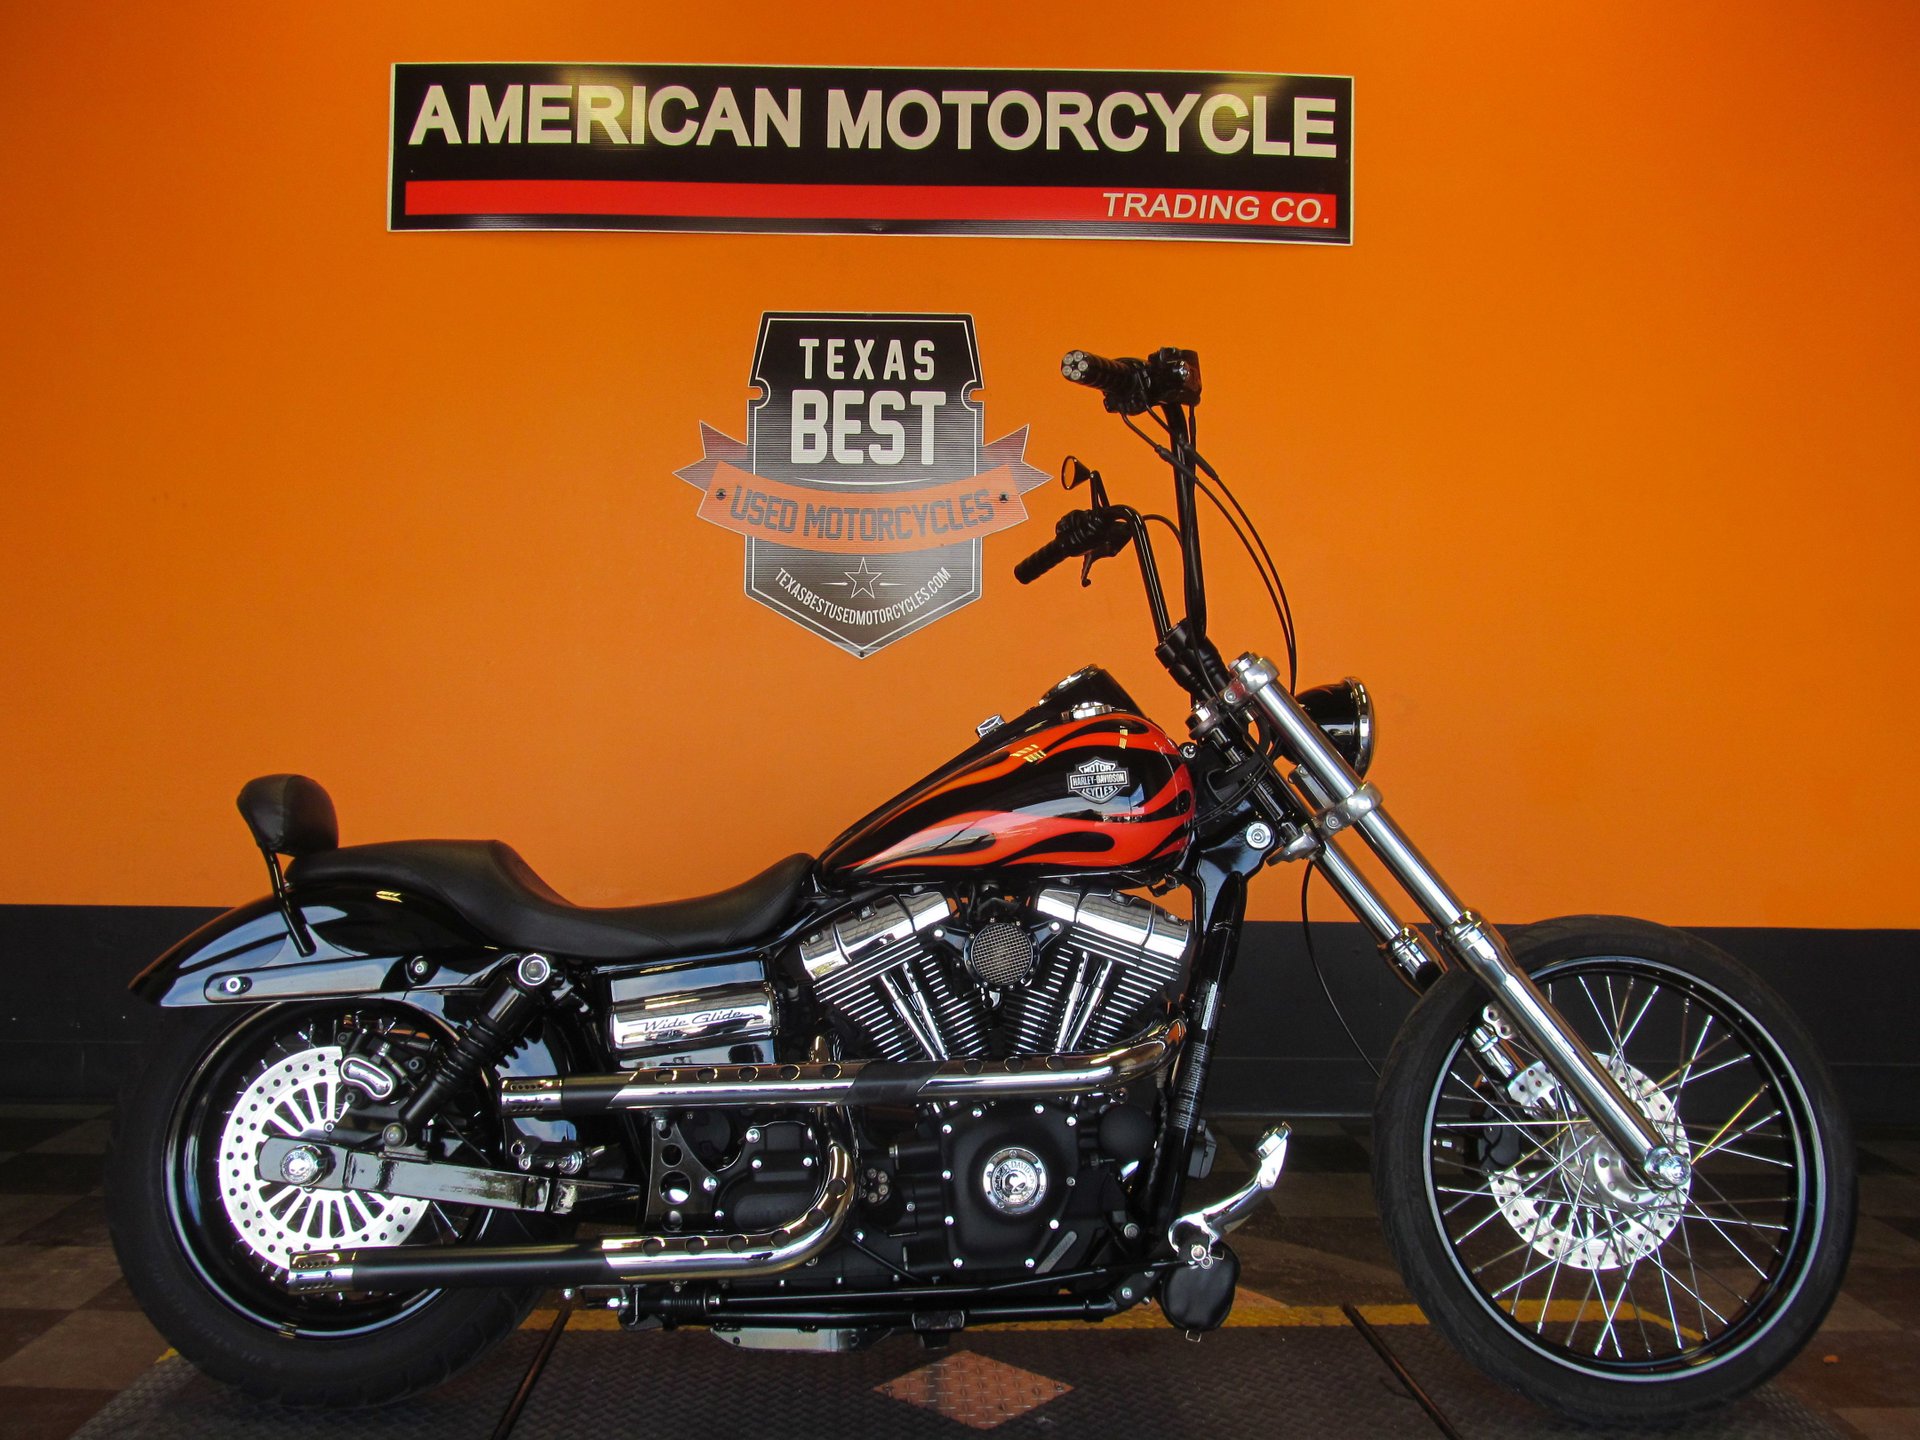 2010 Harley Davidson Dyna Wide Glide American Motorcycle Trading Company Used Harley Davidson Motorcycles